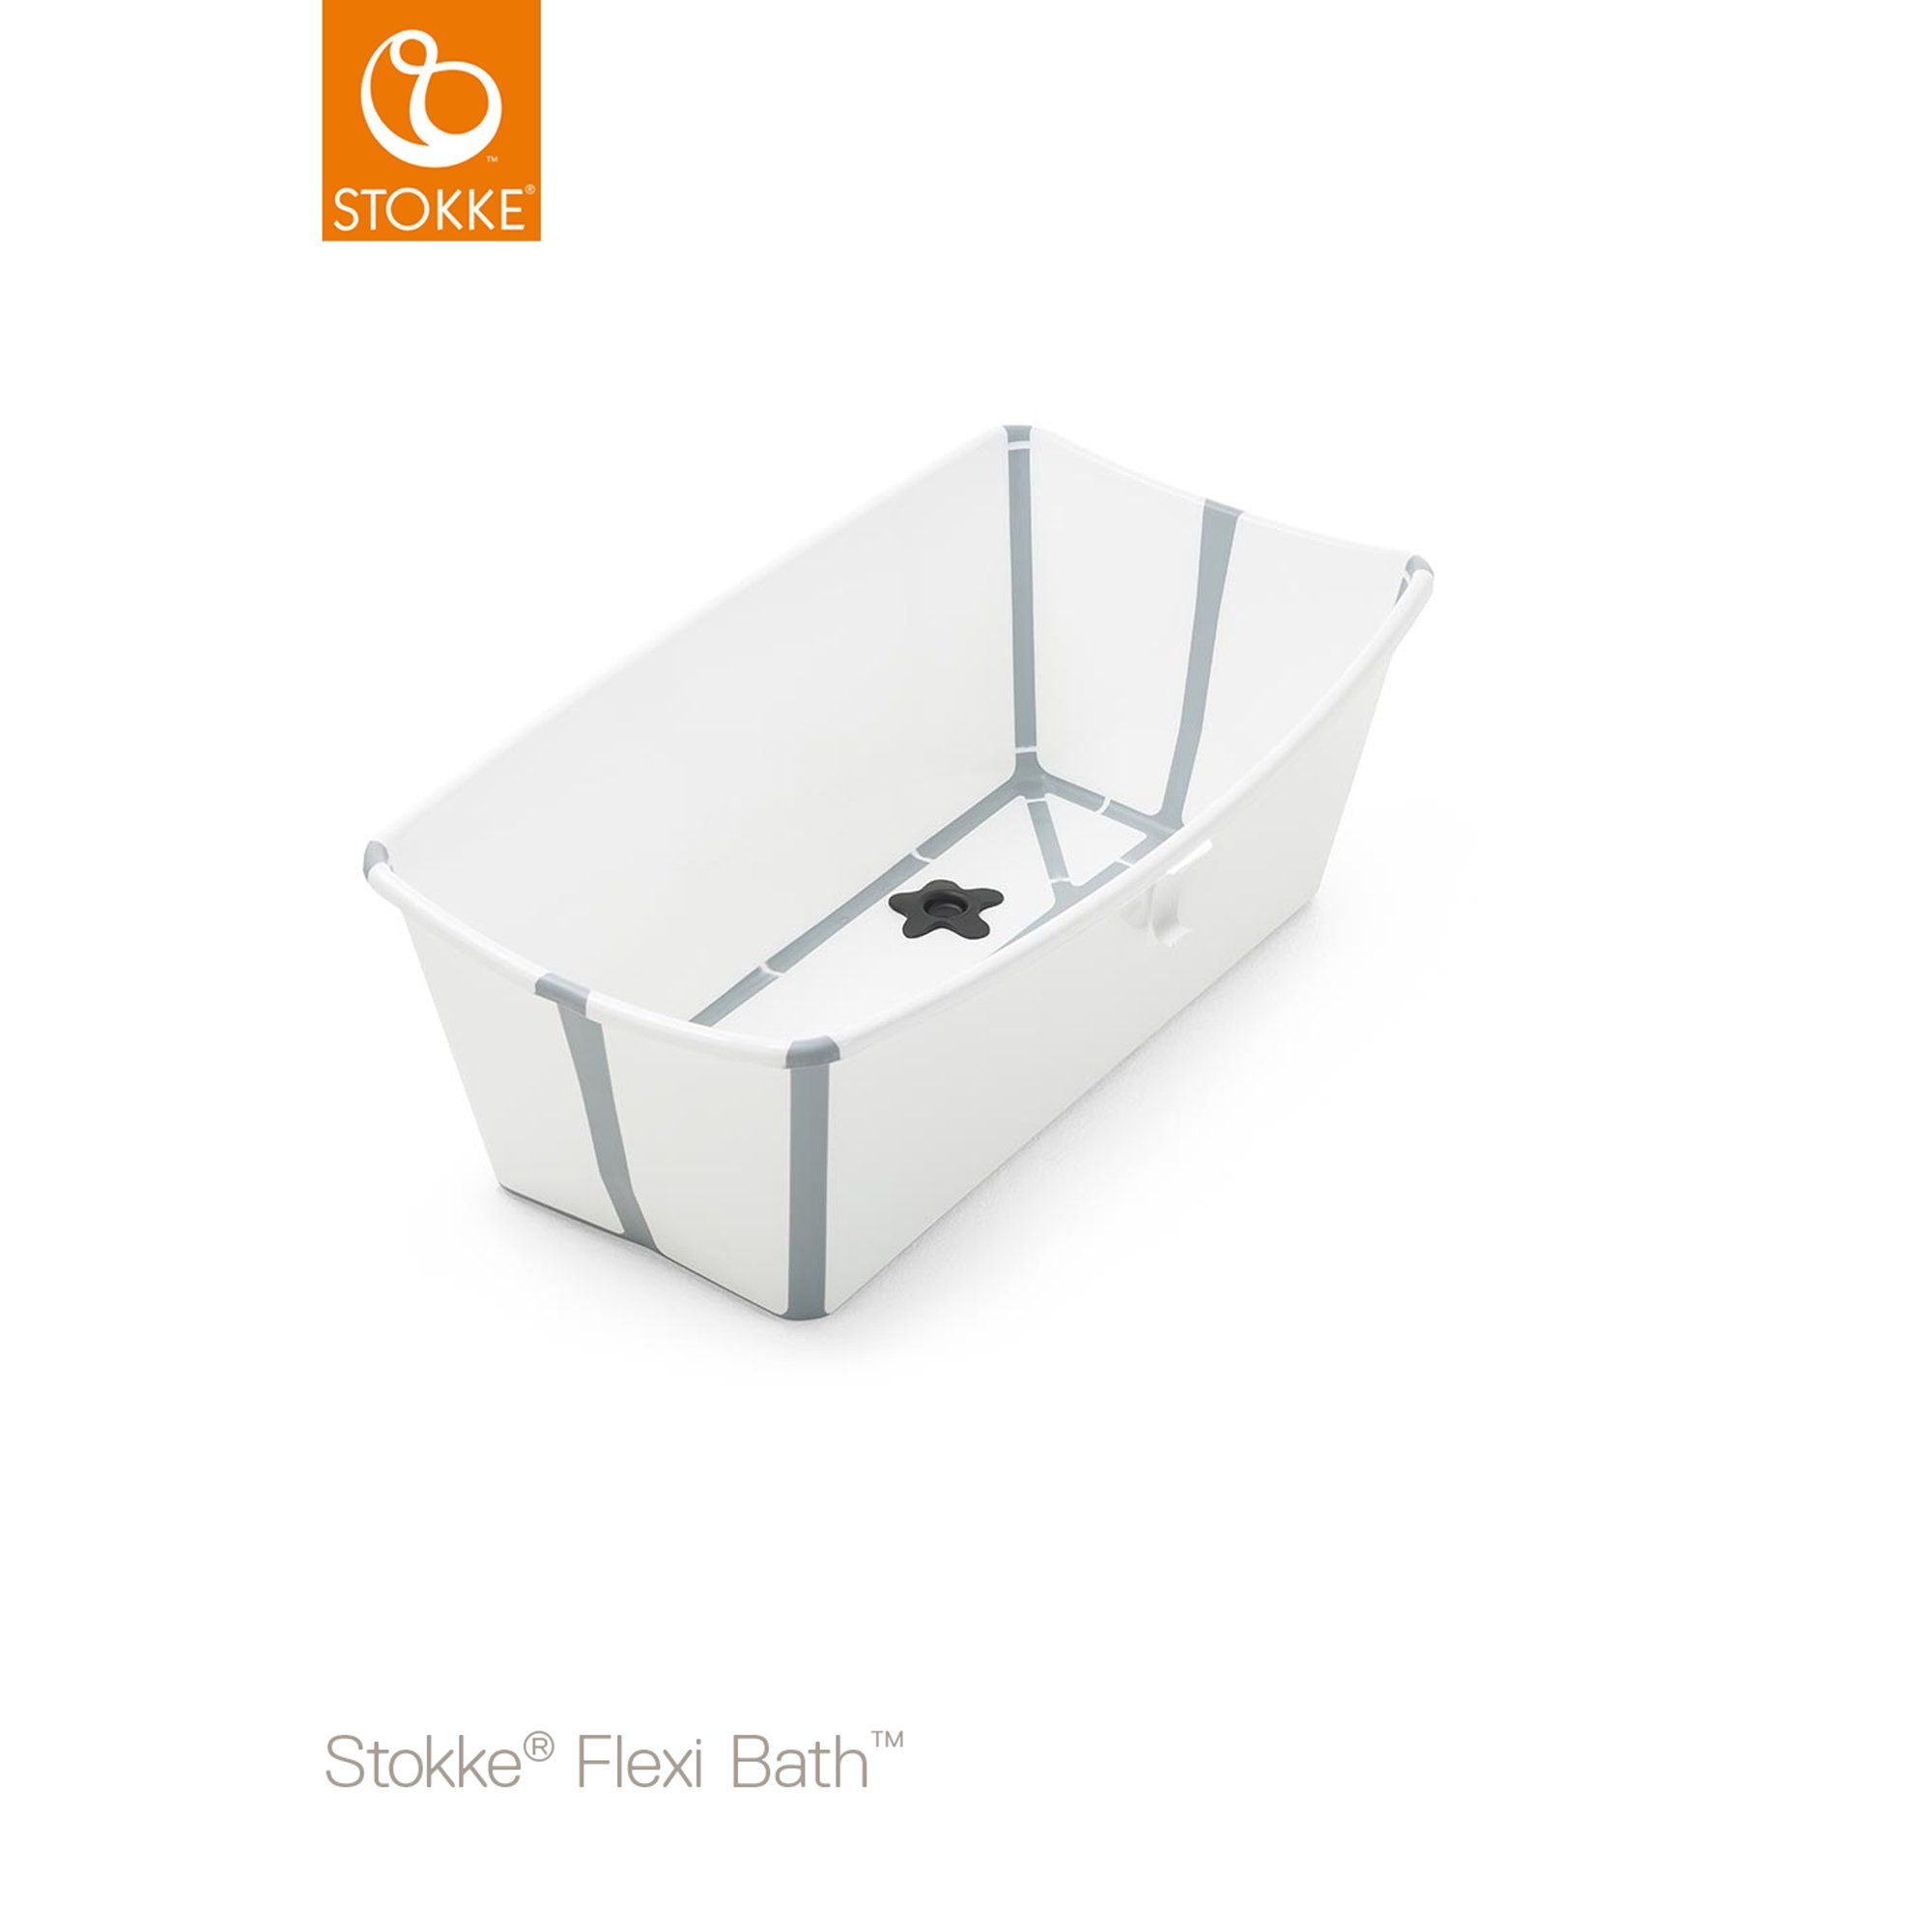 Baignoire Flexi Bath® (Stokke®) - Image 1